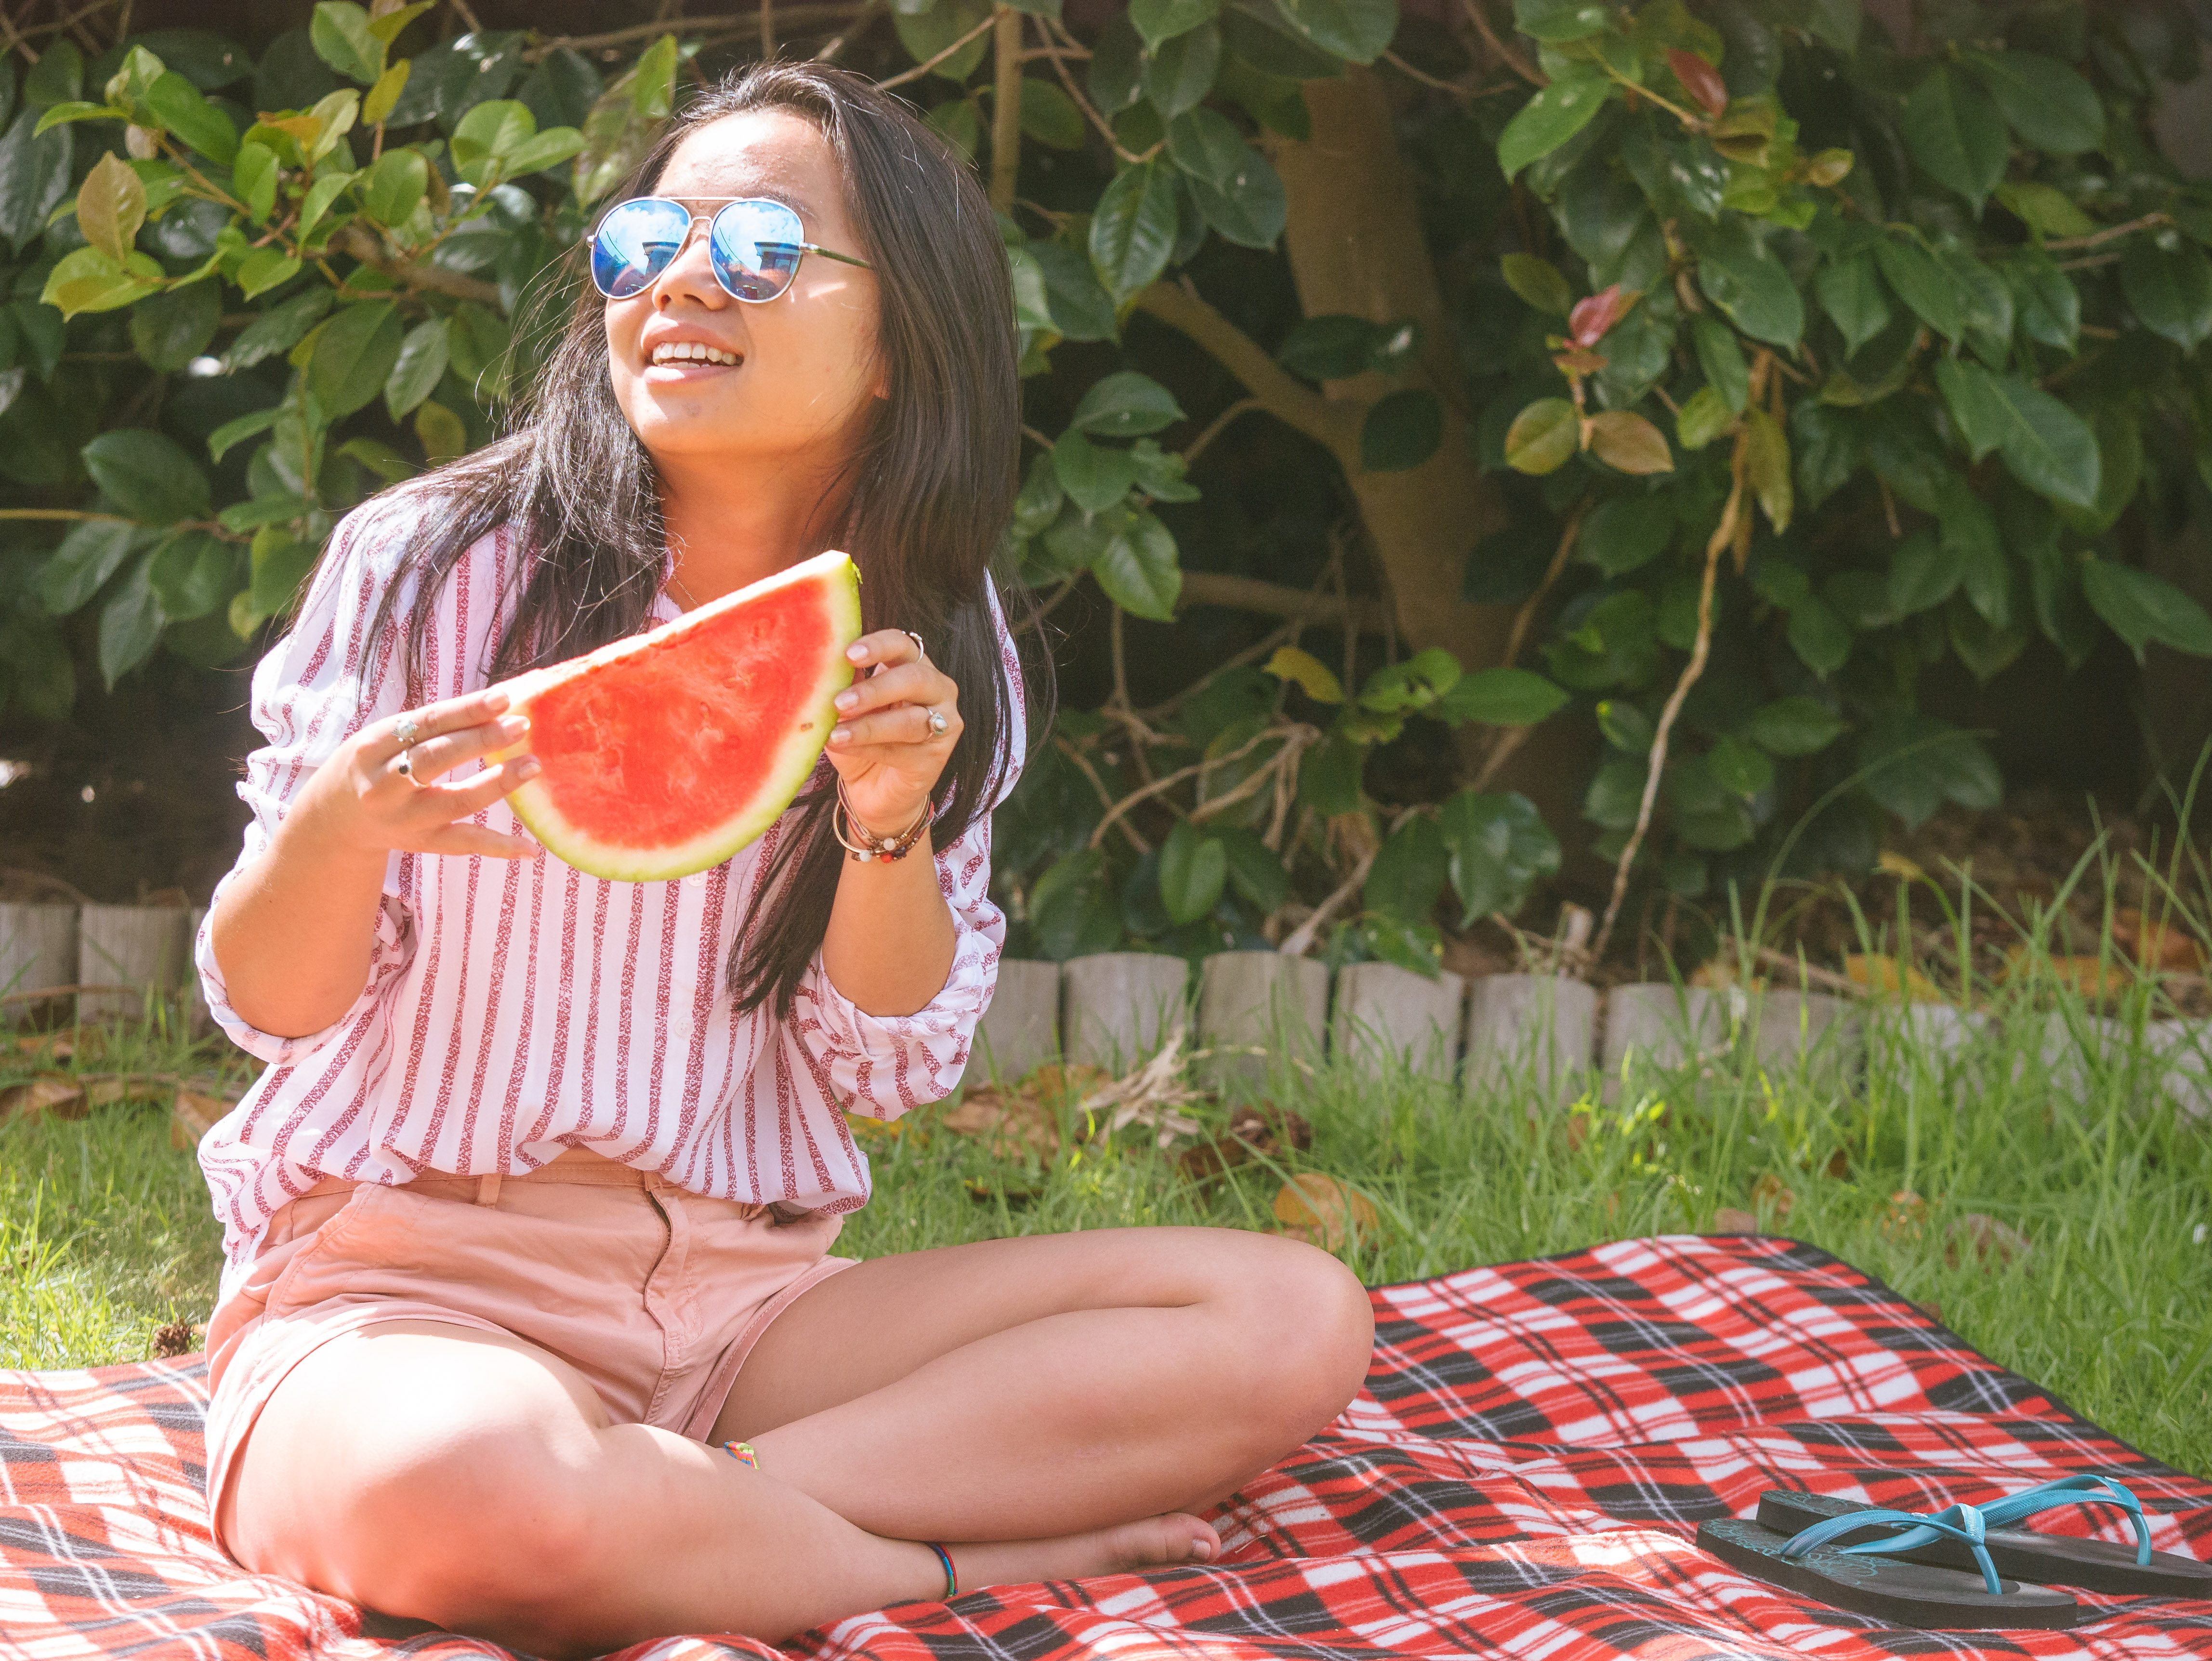 Watermelon: Summer Self-Portrait